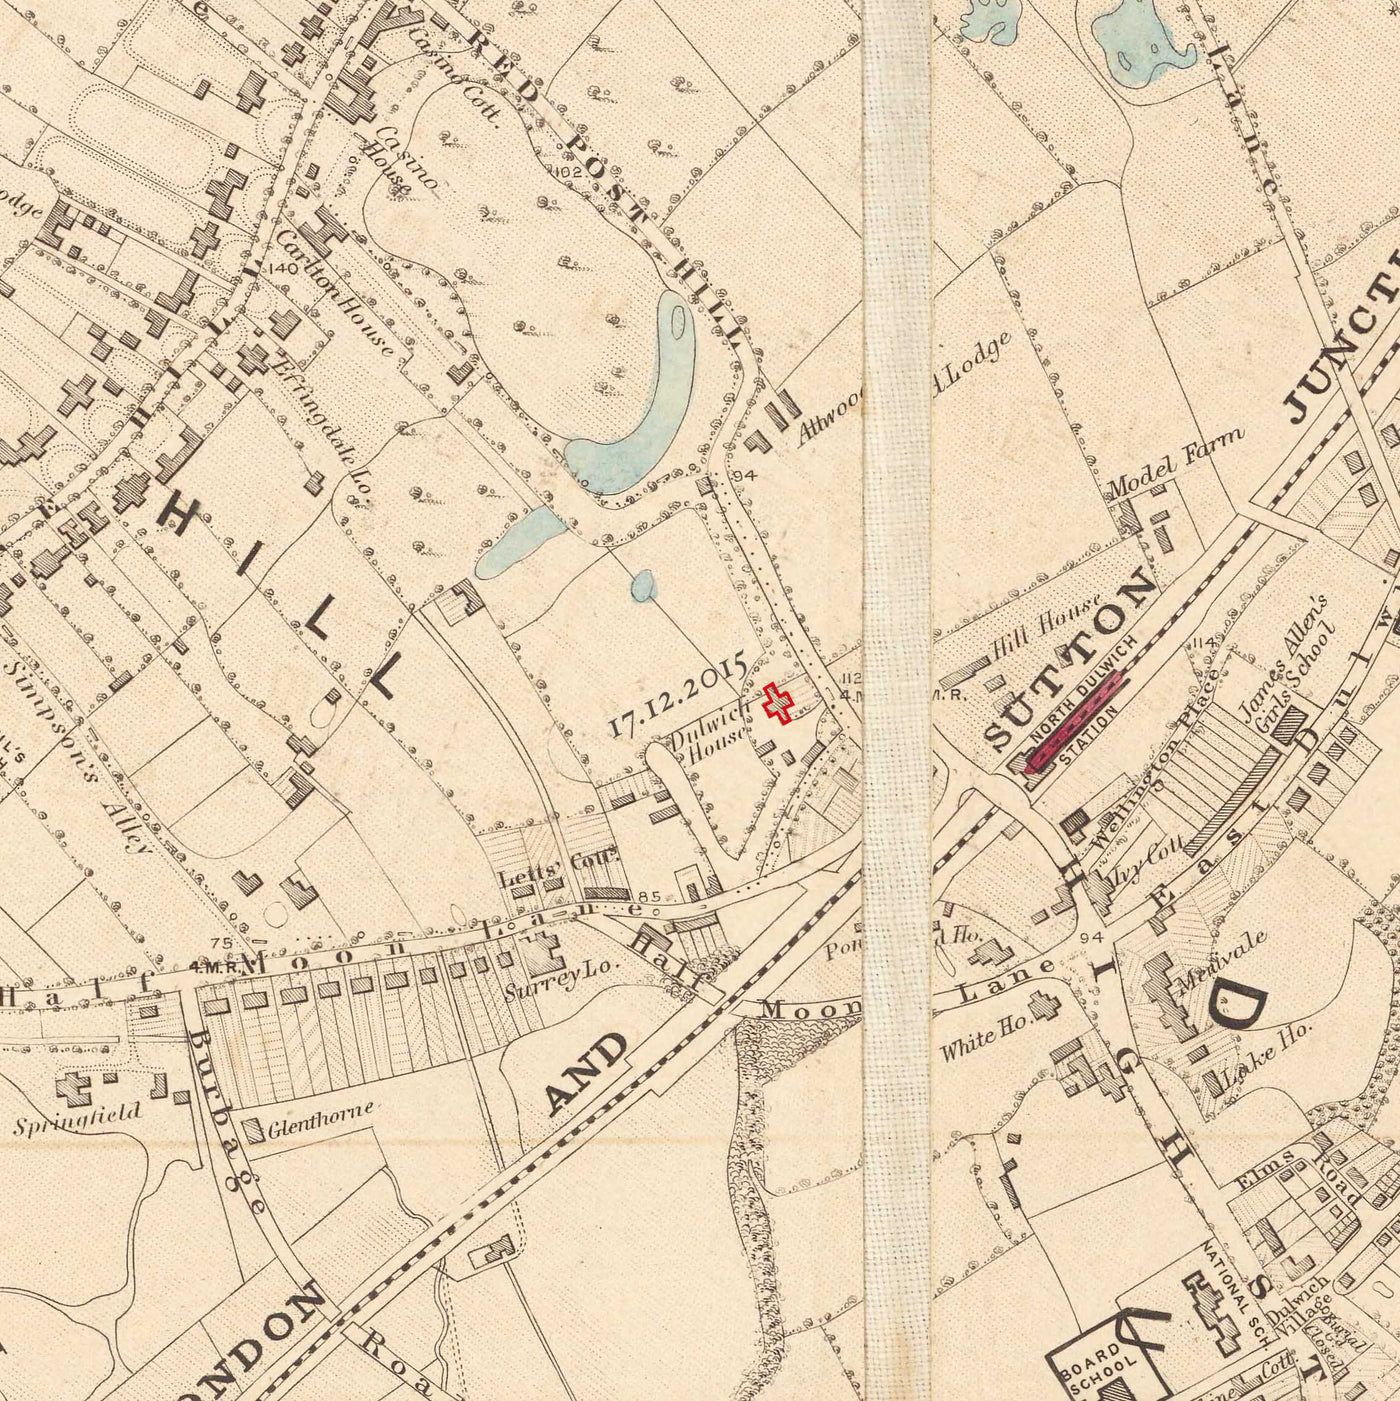 Antiguo mapa en color del oeste de Londres, 1862 - St Johns Wood, Kilburn, Kensal Green, Finchley Rd, Willesden - NW6, NW8, NW2, W9, W10, NW10